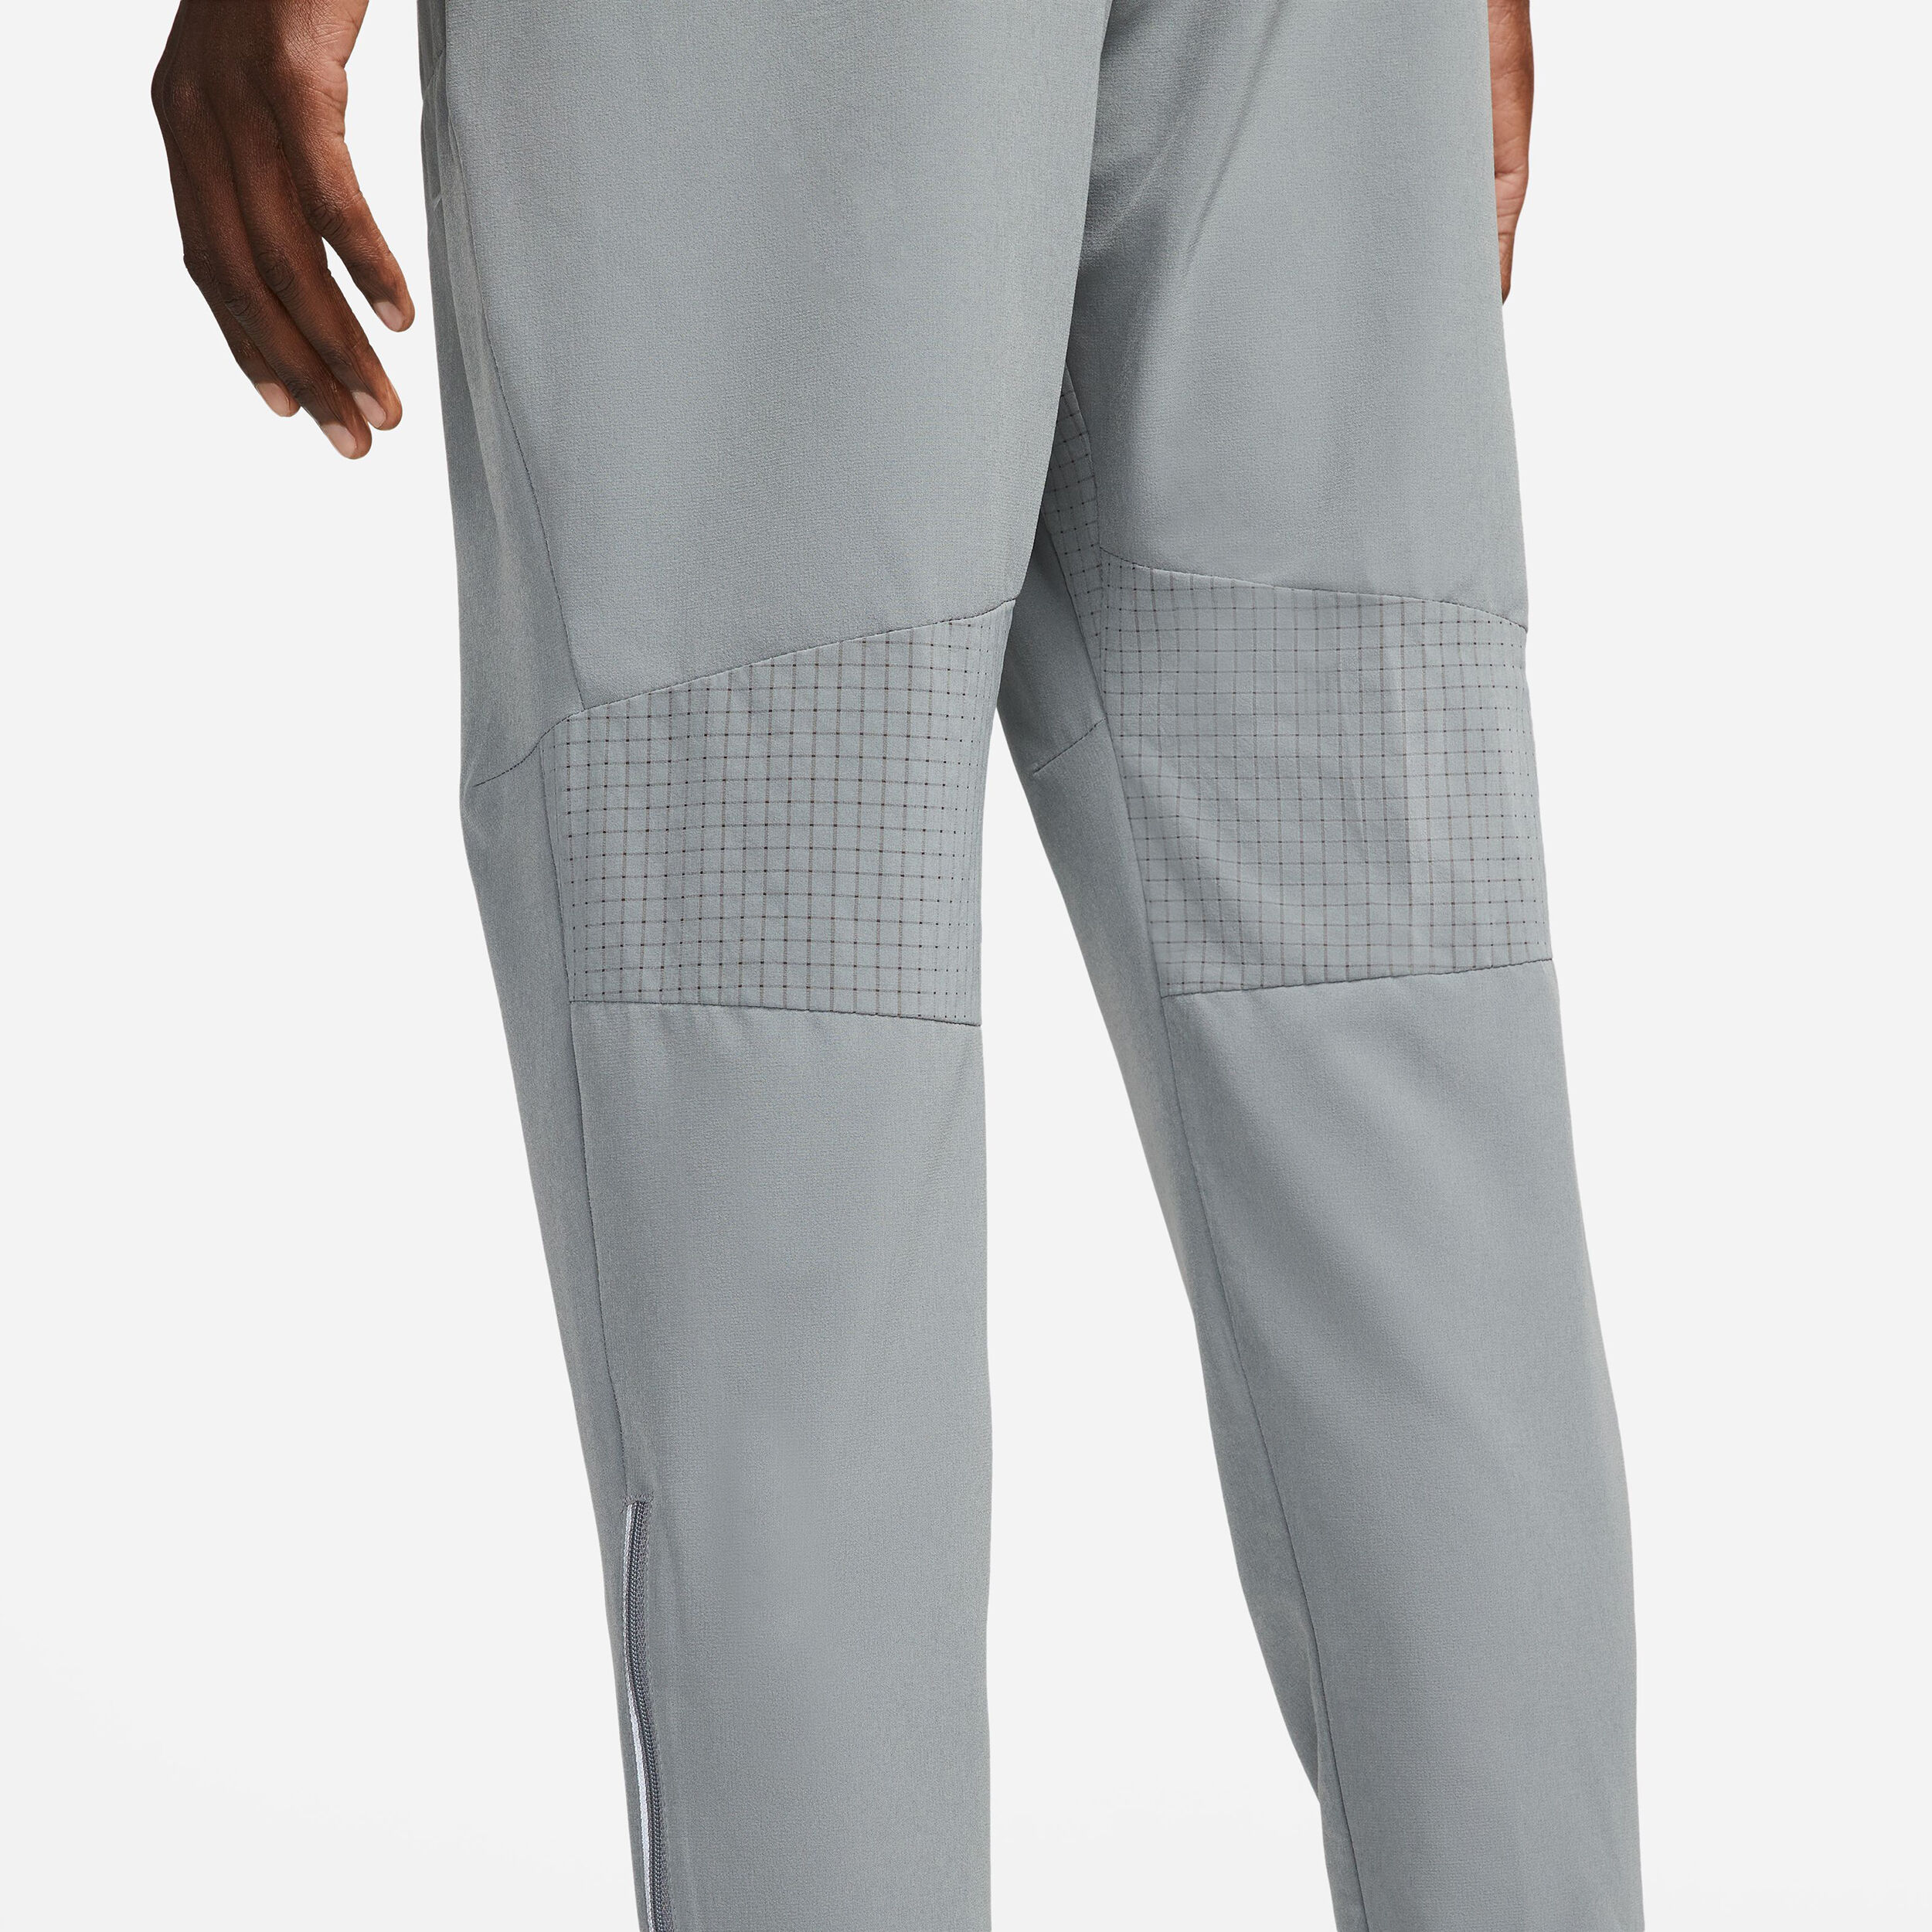 Nike Men's Size Large Phenom Elite Knit Running Pants CU5504 077 | eBay